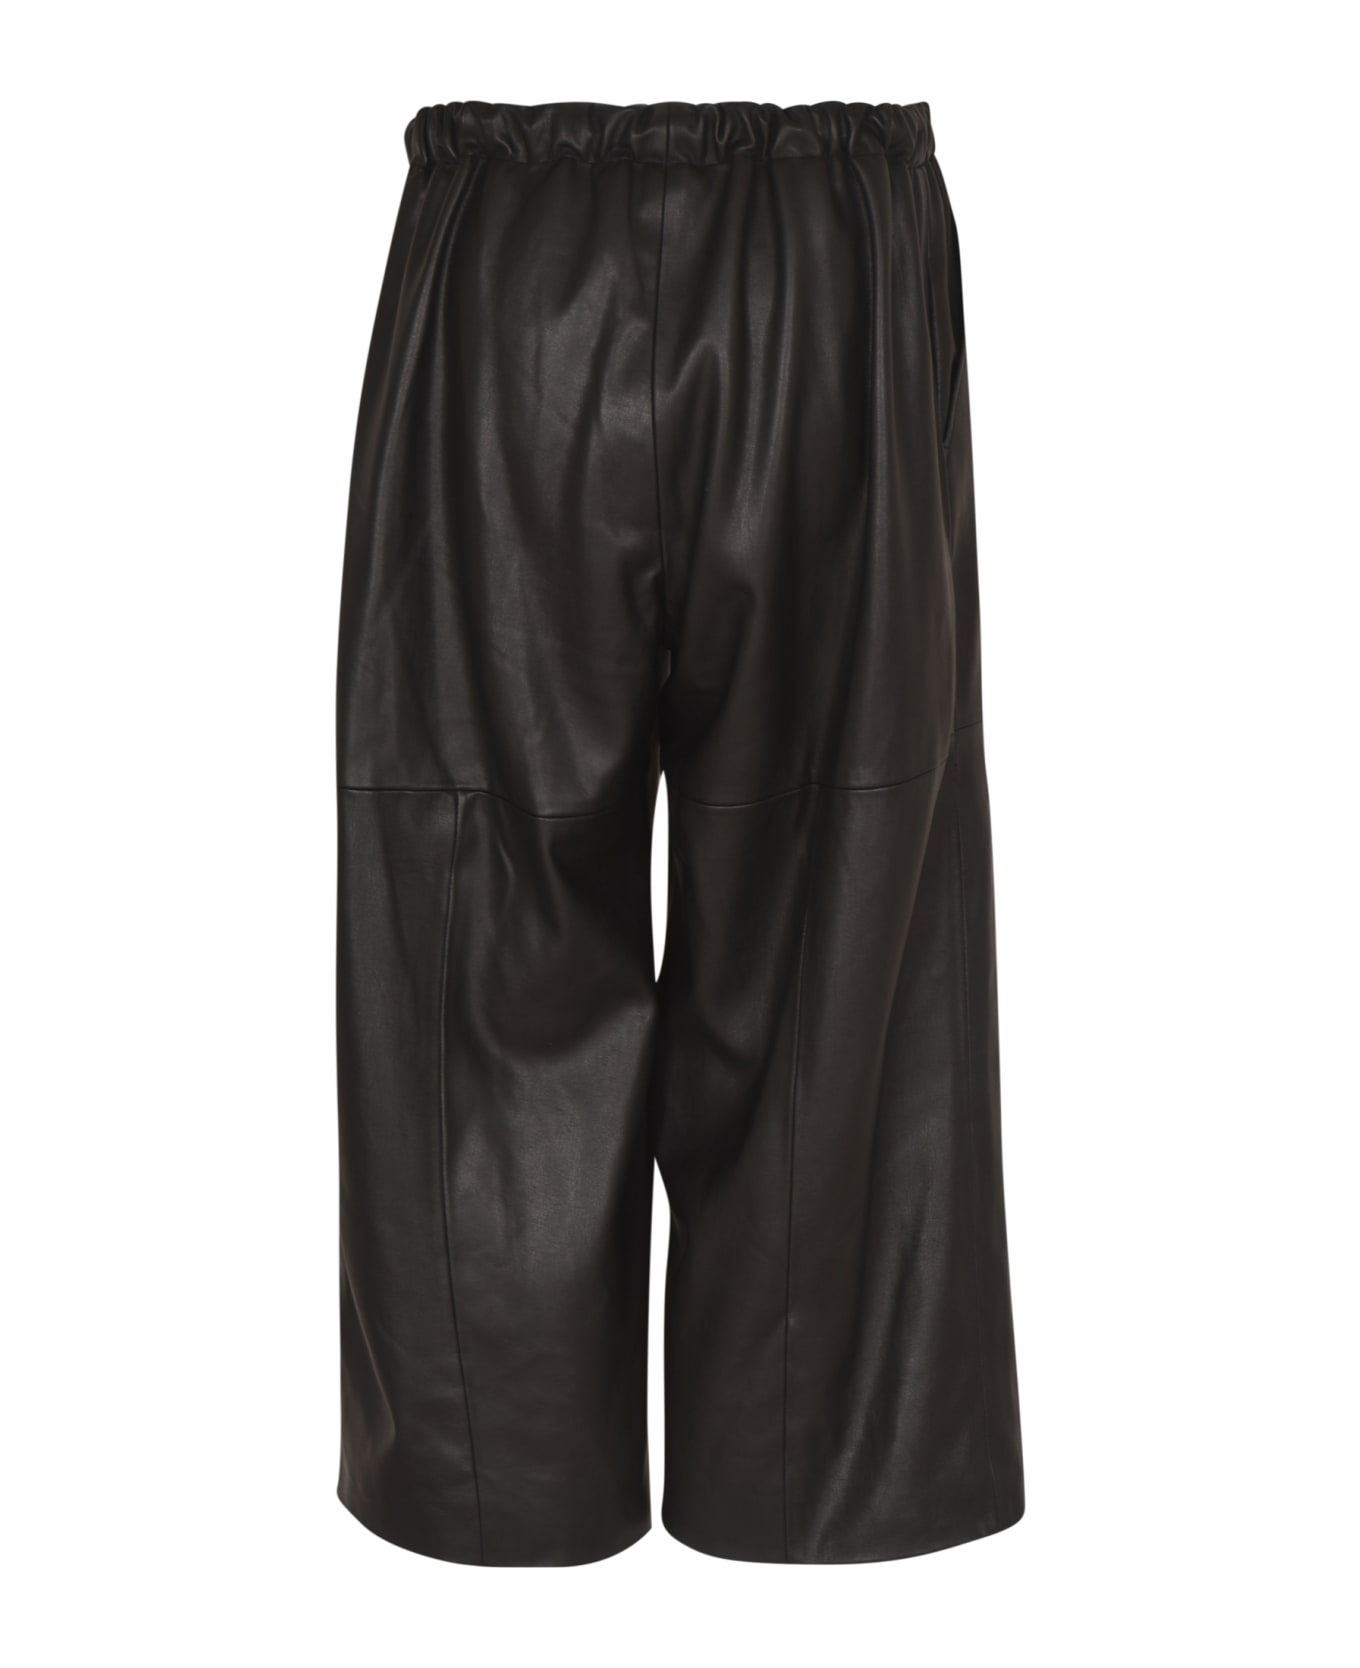 VIS A VIS Elastic Waist Cropped Shiny Trousers - Black